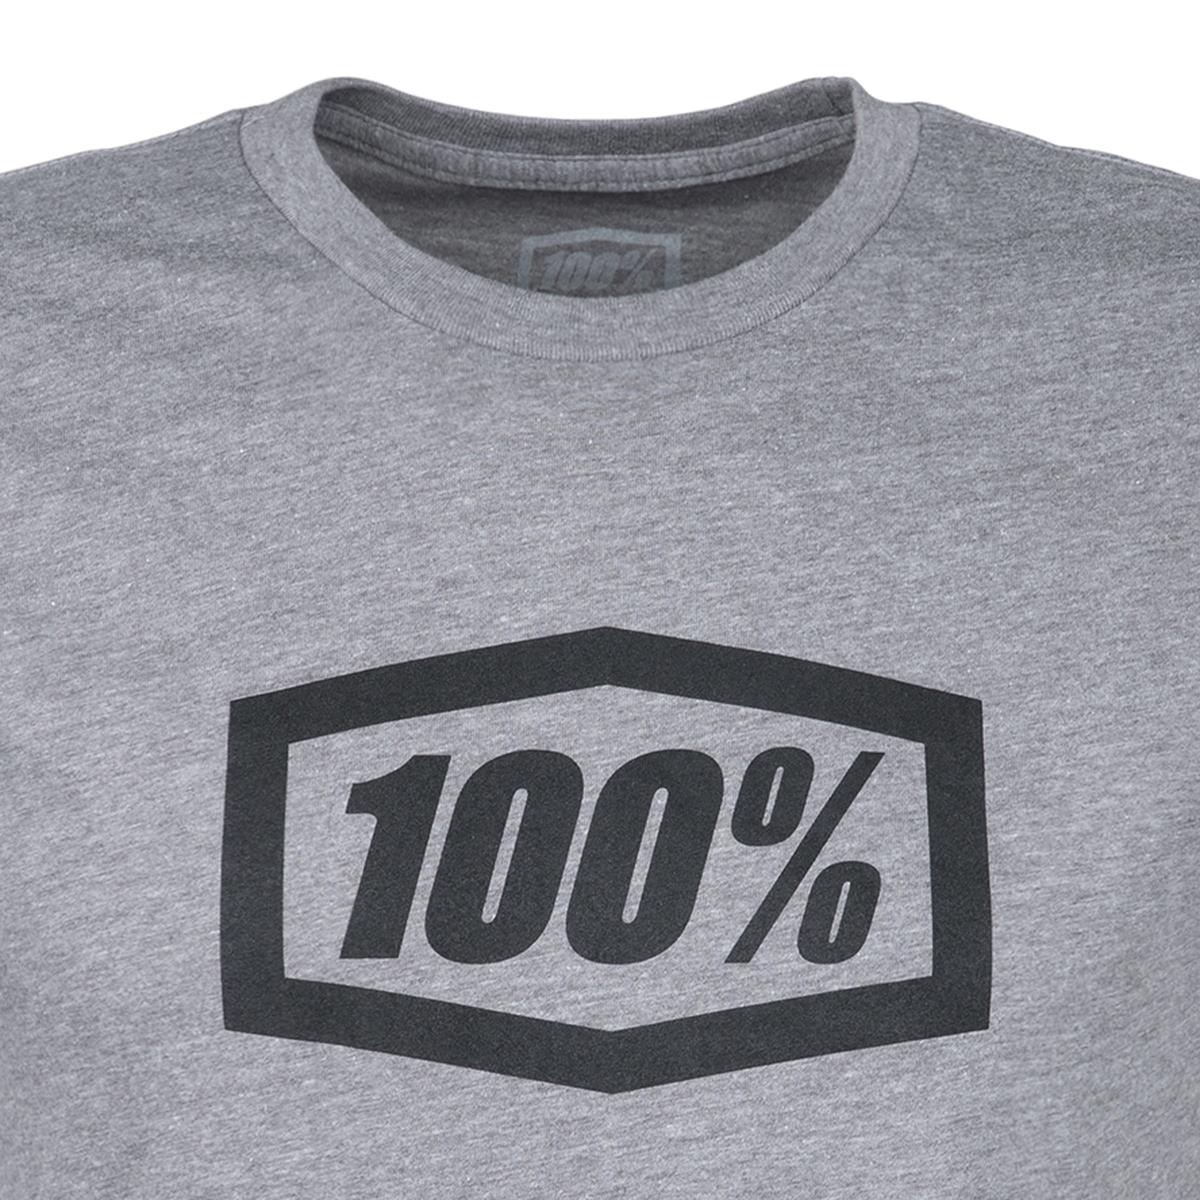 L White 100% MX Motocross ESSENTIAL T-Shirt Large 